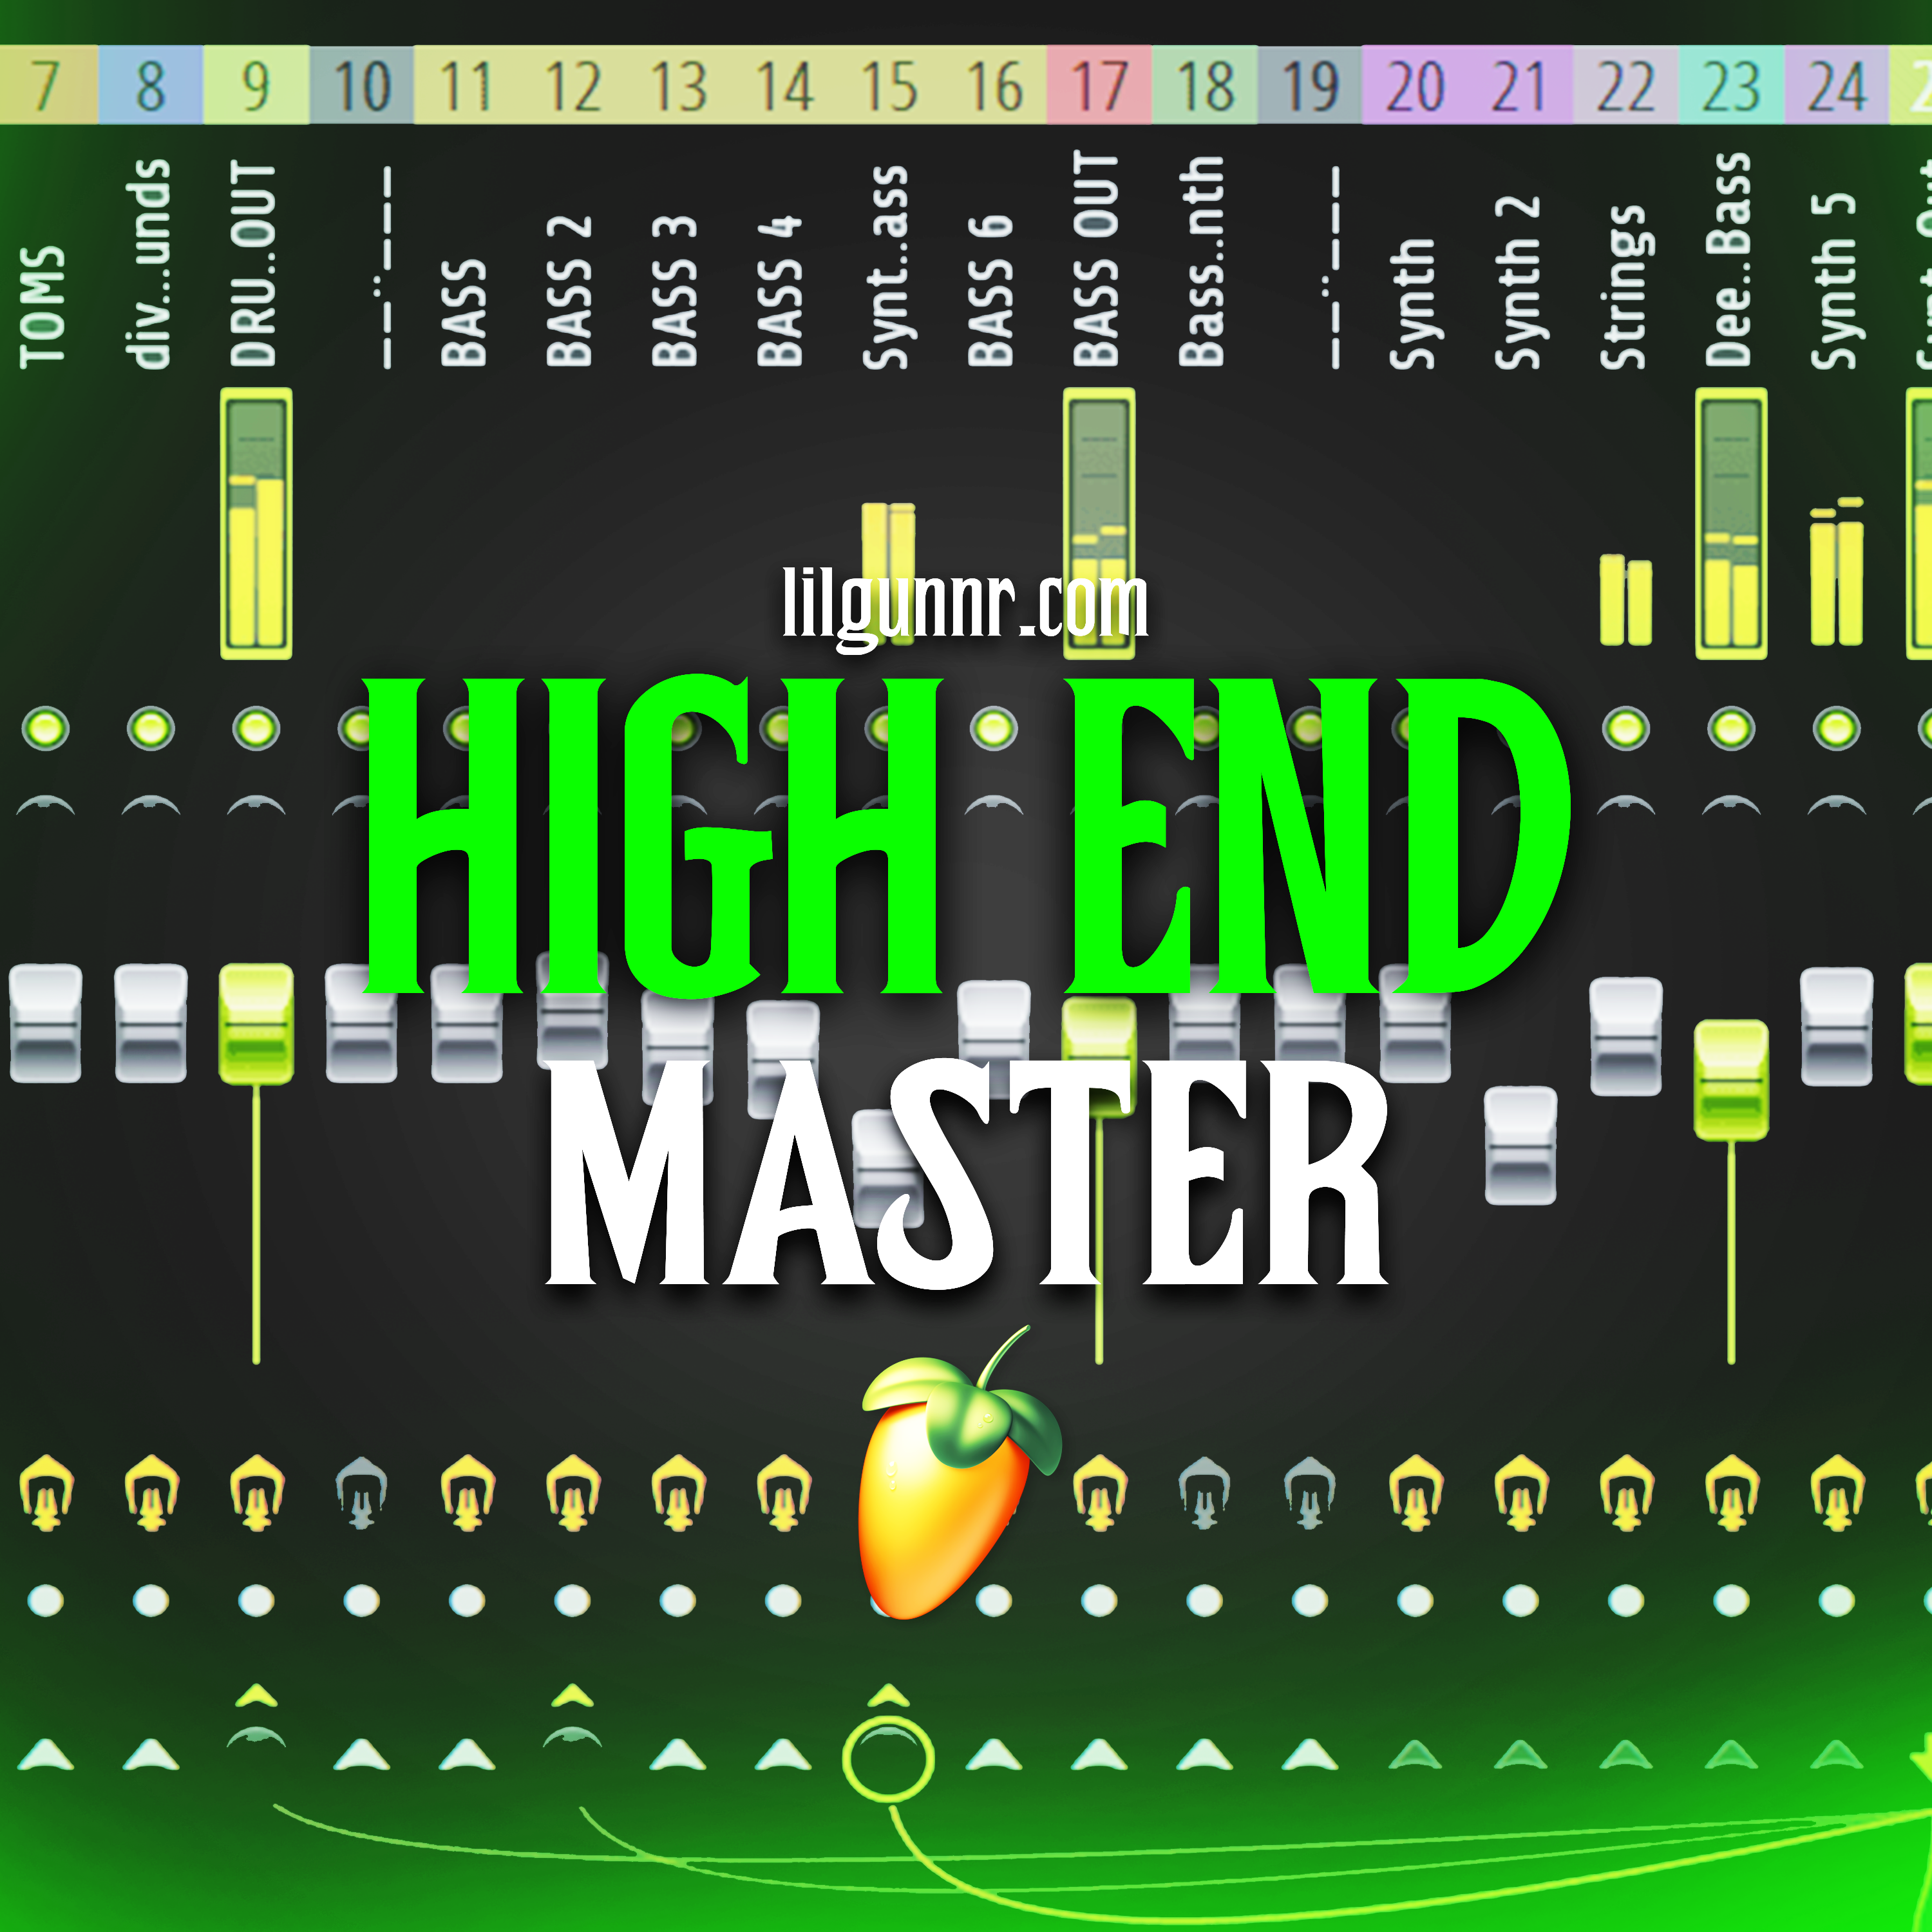 The High End Master Preset + Plugin